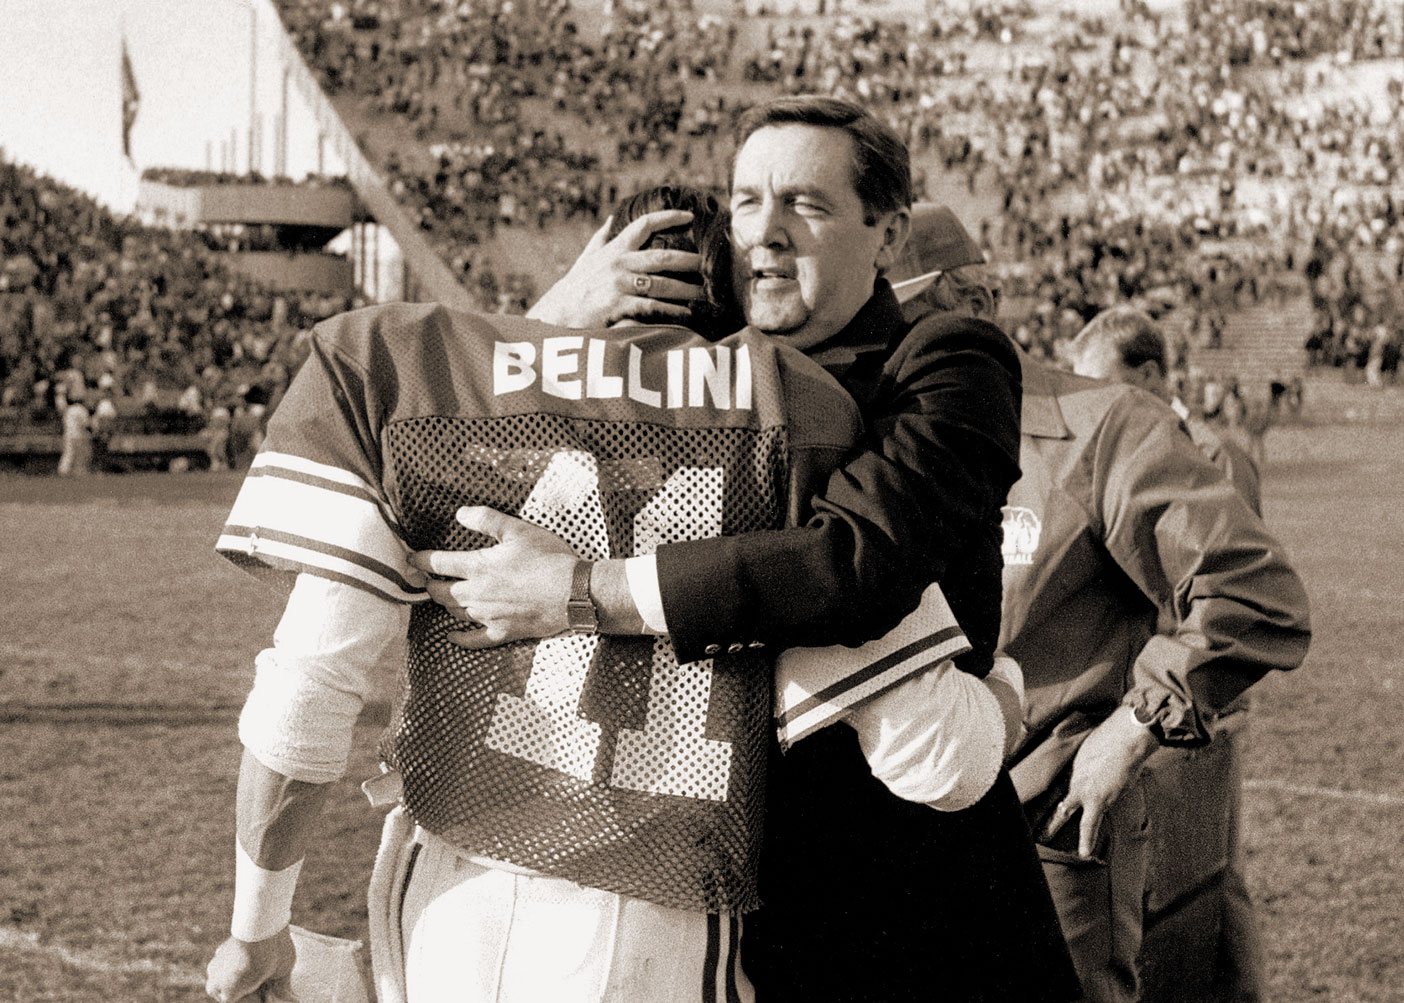 President Jeffrey R. Holland embraces wide receiver Mark J. Bellin during a 1986 football senior ceremony.